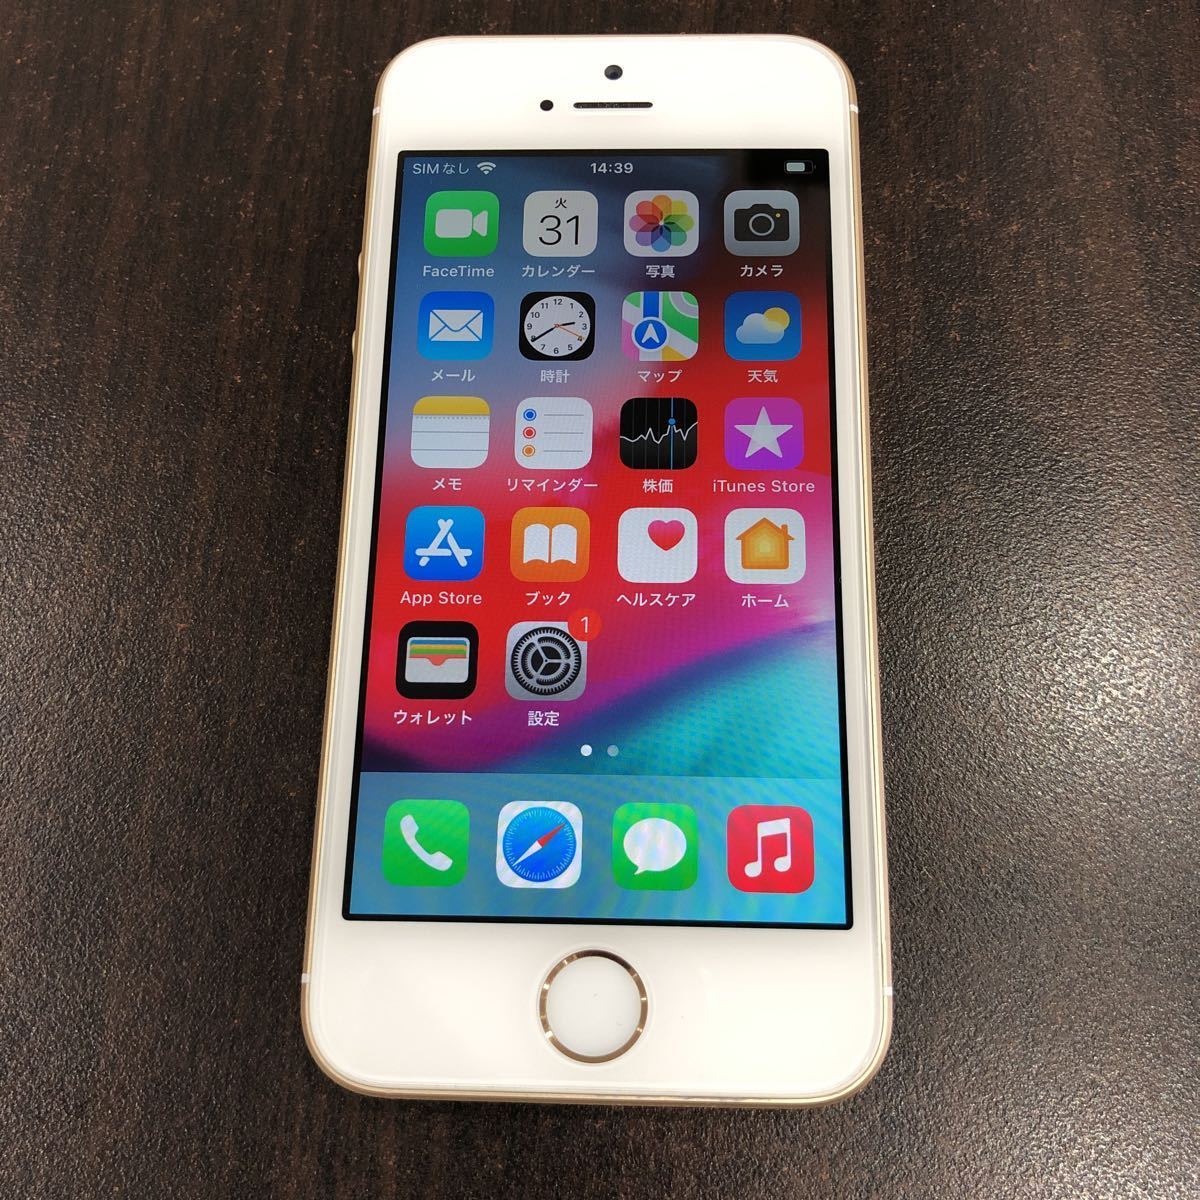 Apple SIMフリー iPhone SE 32GB ゴールド MP842J/A 美品_画像2